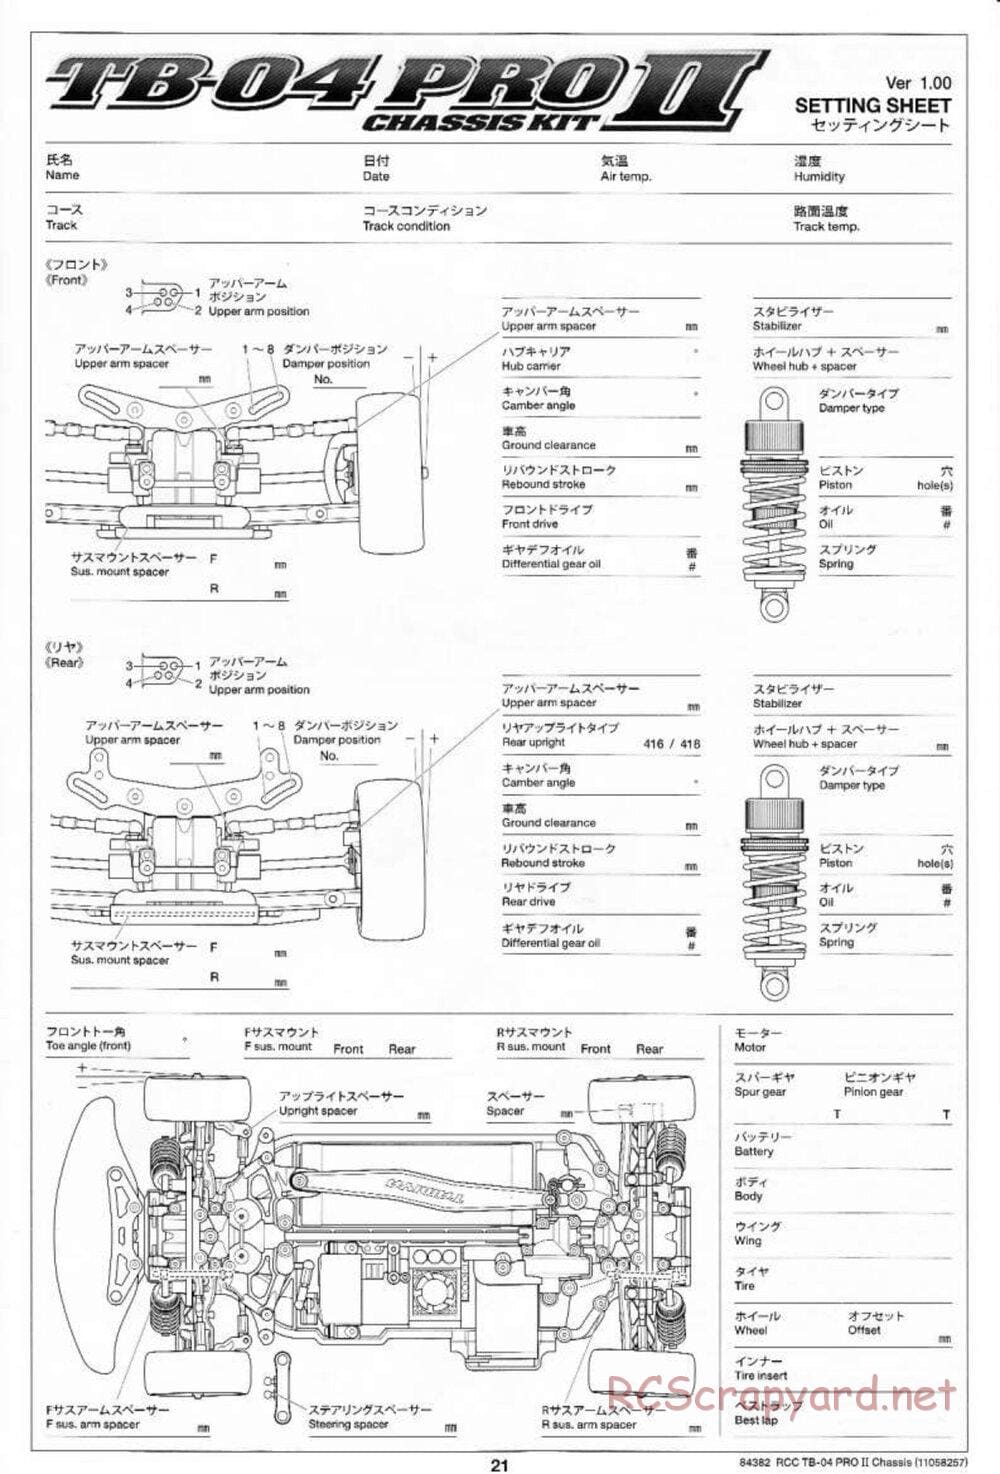 Tamiya - TB-04 Pro II Chassis - Manual - Page 21